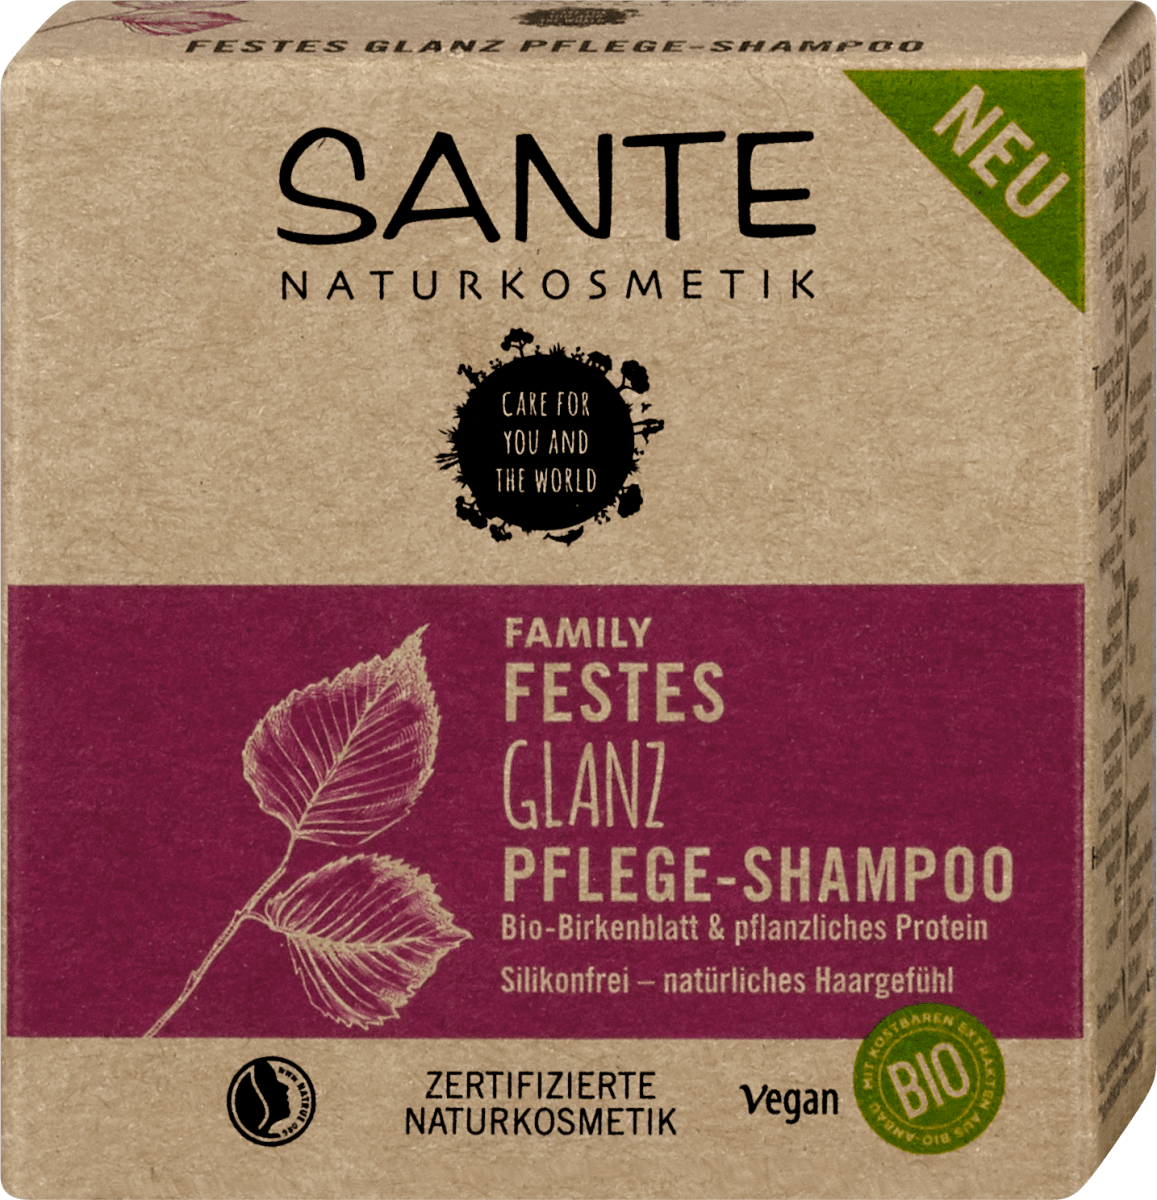 SANTE NATURKOSMETIK Family Festes Glanz Pflege-Shampoo, 60 g